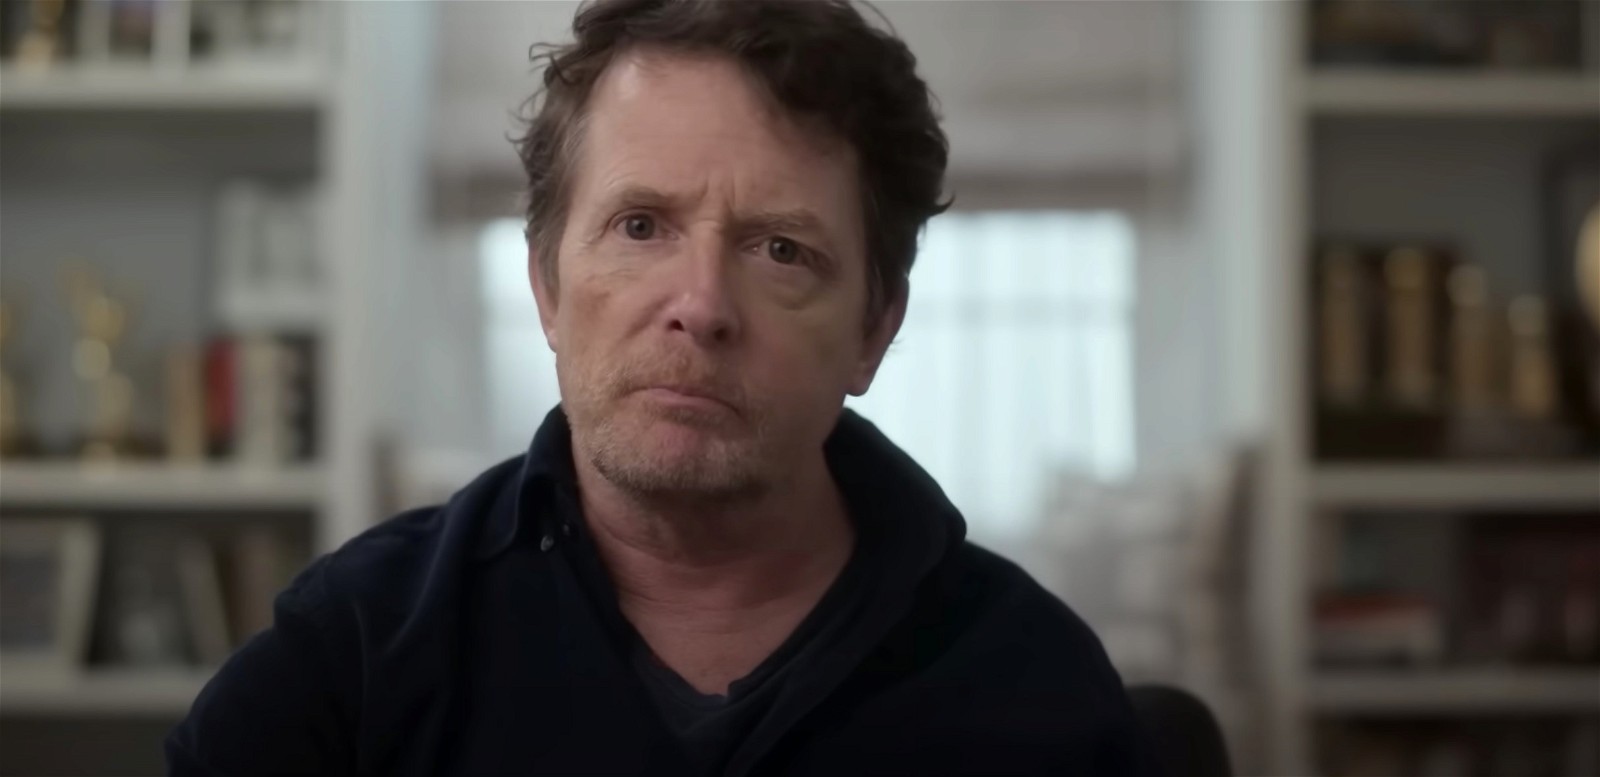 Michael J. Fox's documentary Still: A Michael J Fox Movie chronicles his struggles with Parkinson's disease